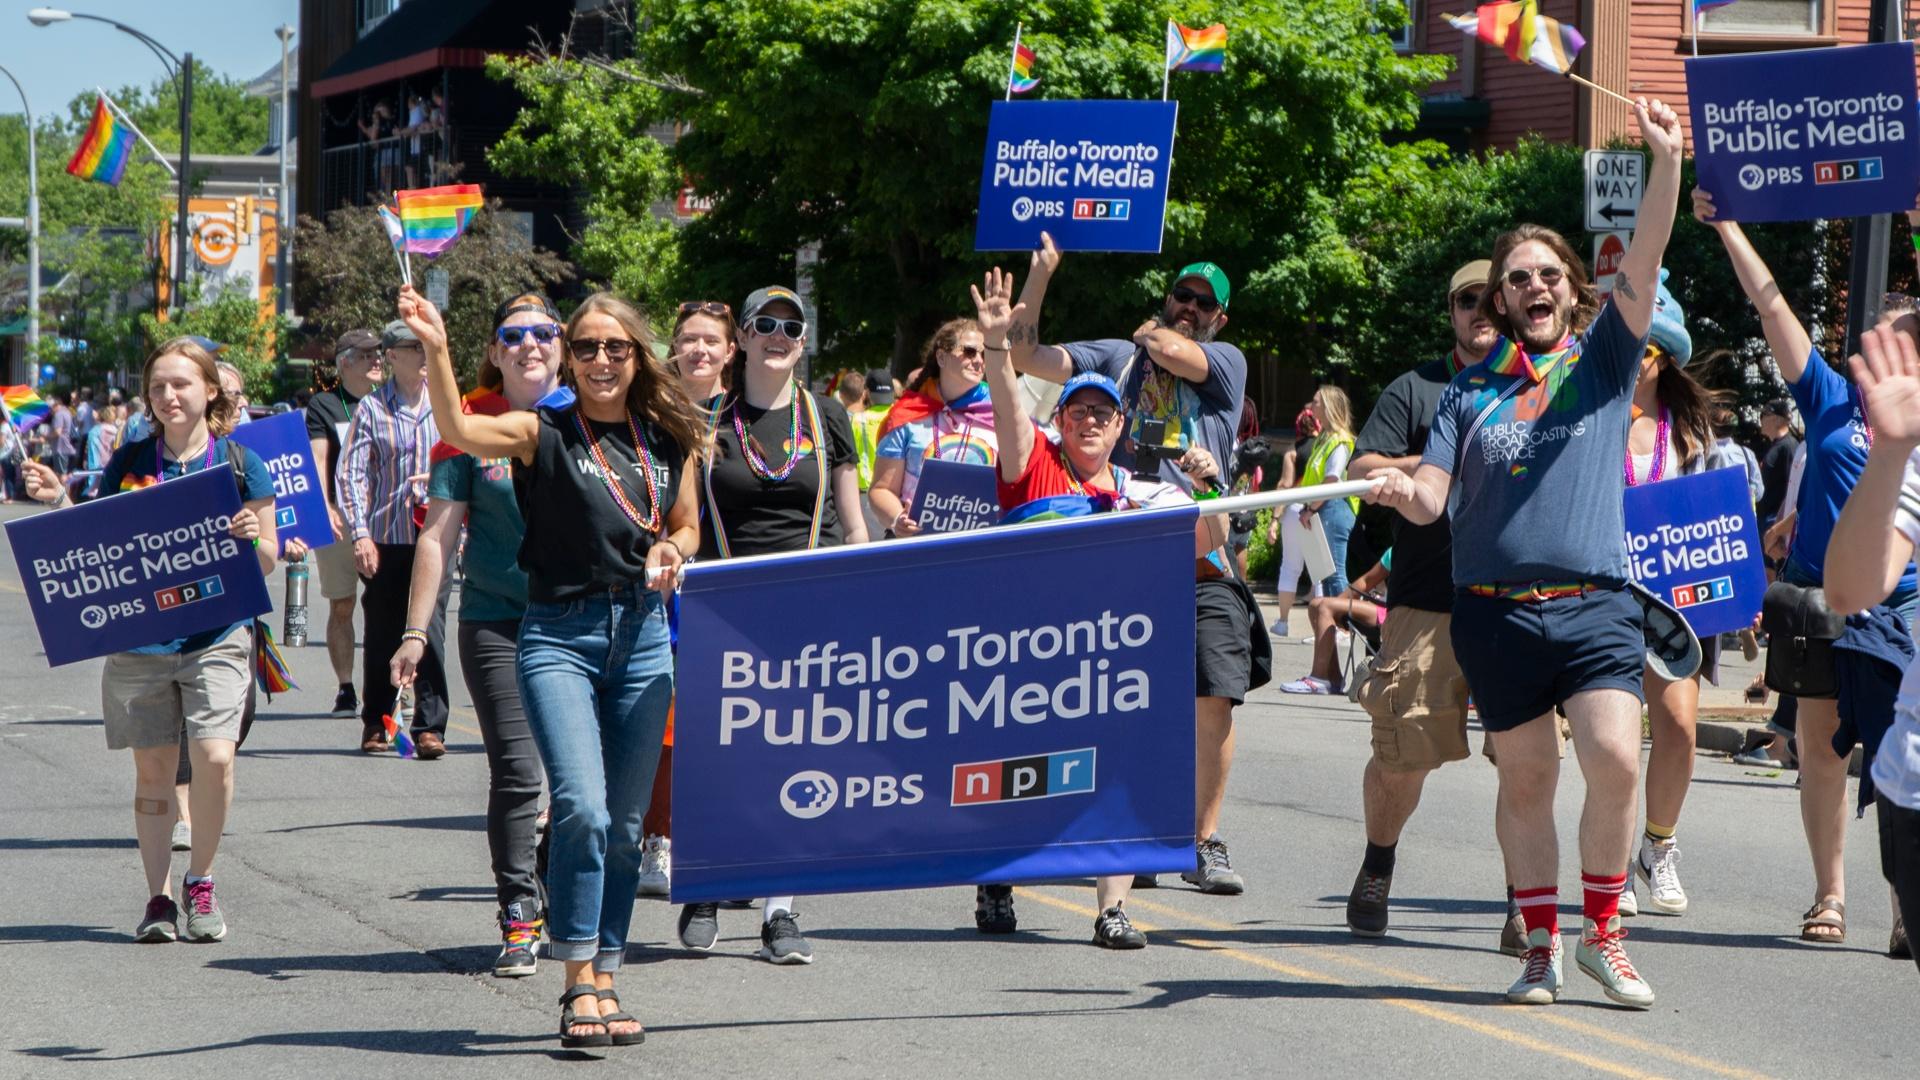 BTPM staff marches down Elmwood Avenue in the Buffalo Pride parade